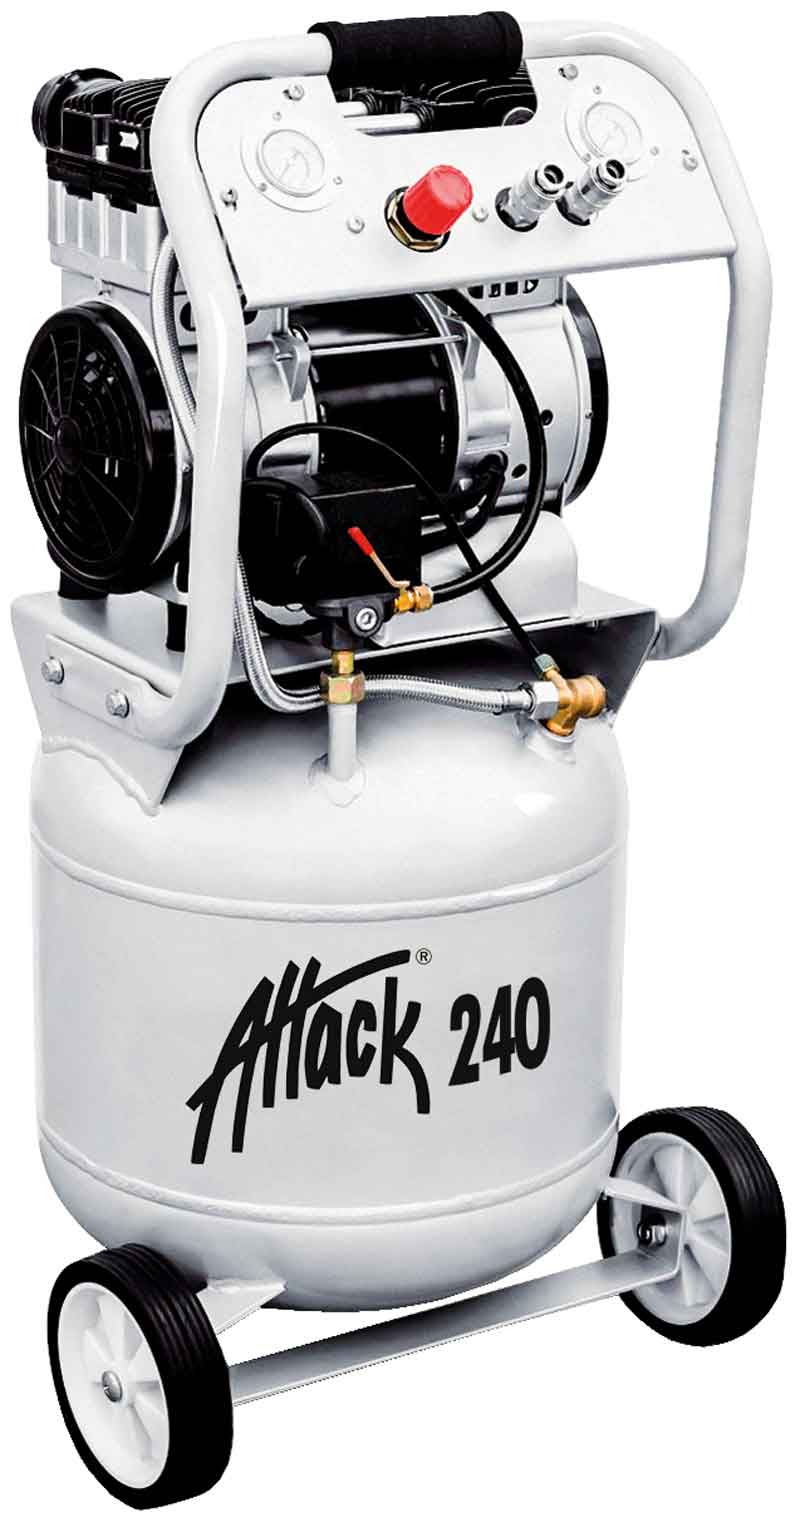 Kompressor Attack 240 2 HK